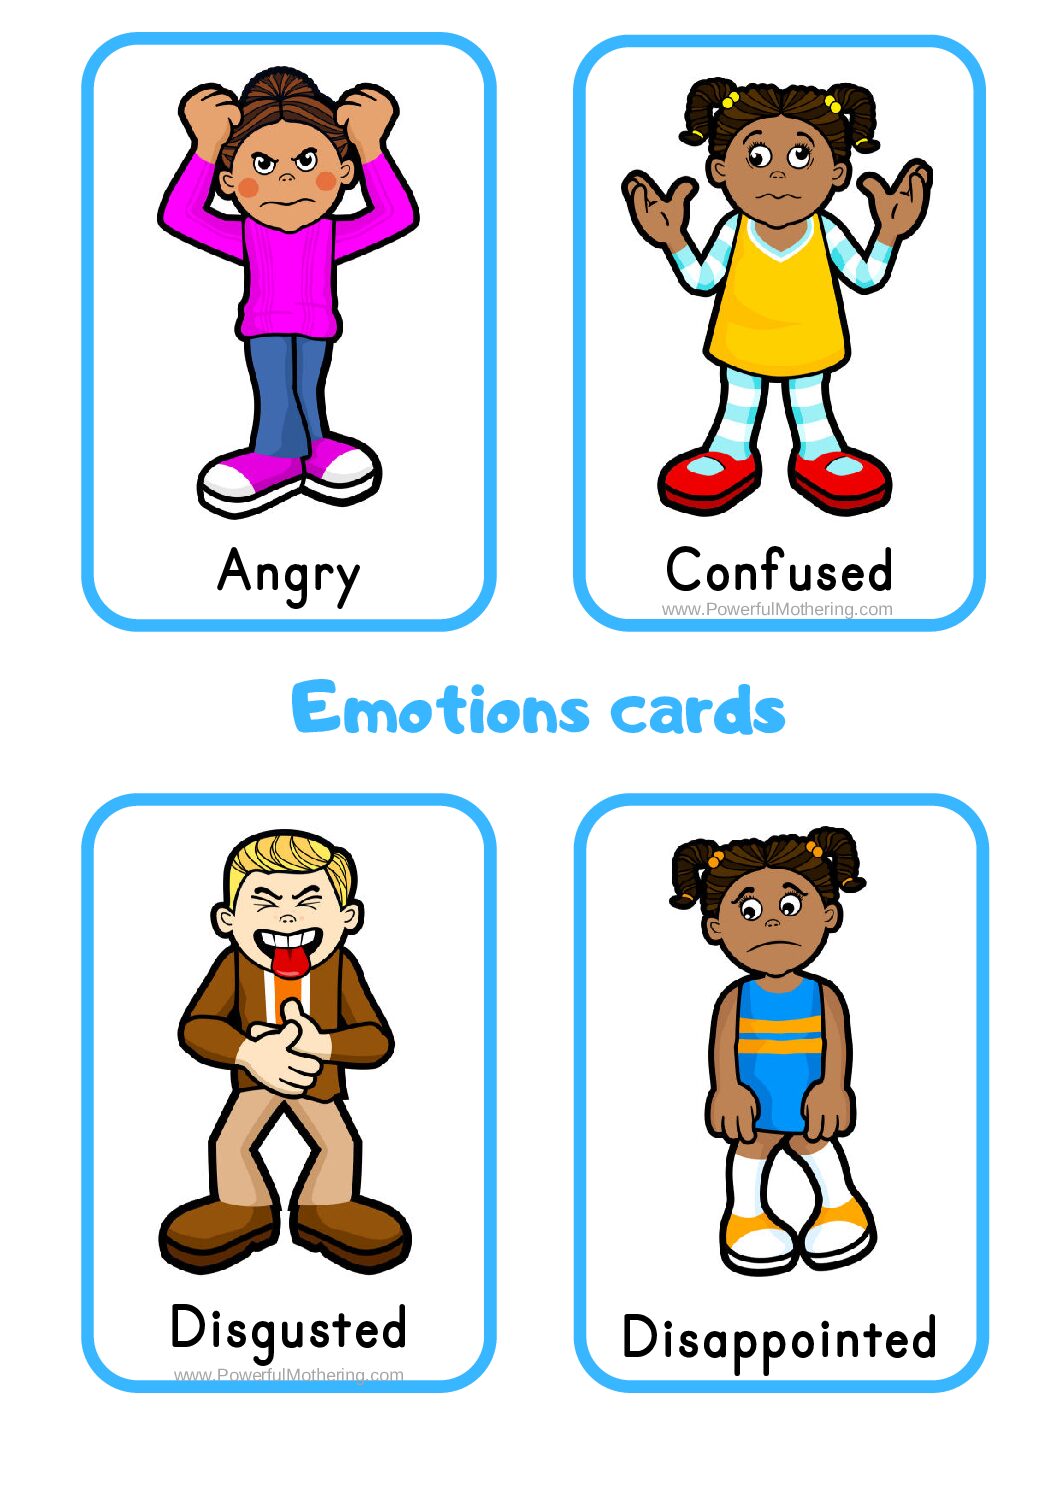 English Feelings & Emotions Cards for Children - Language Advisor